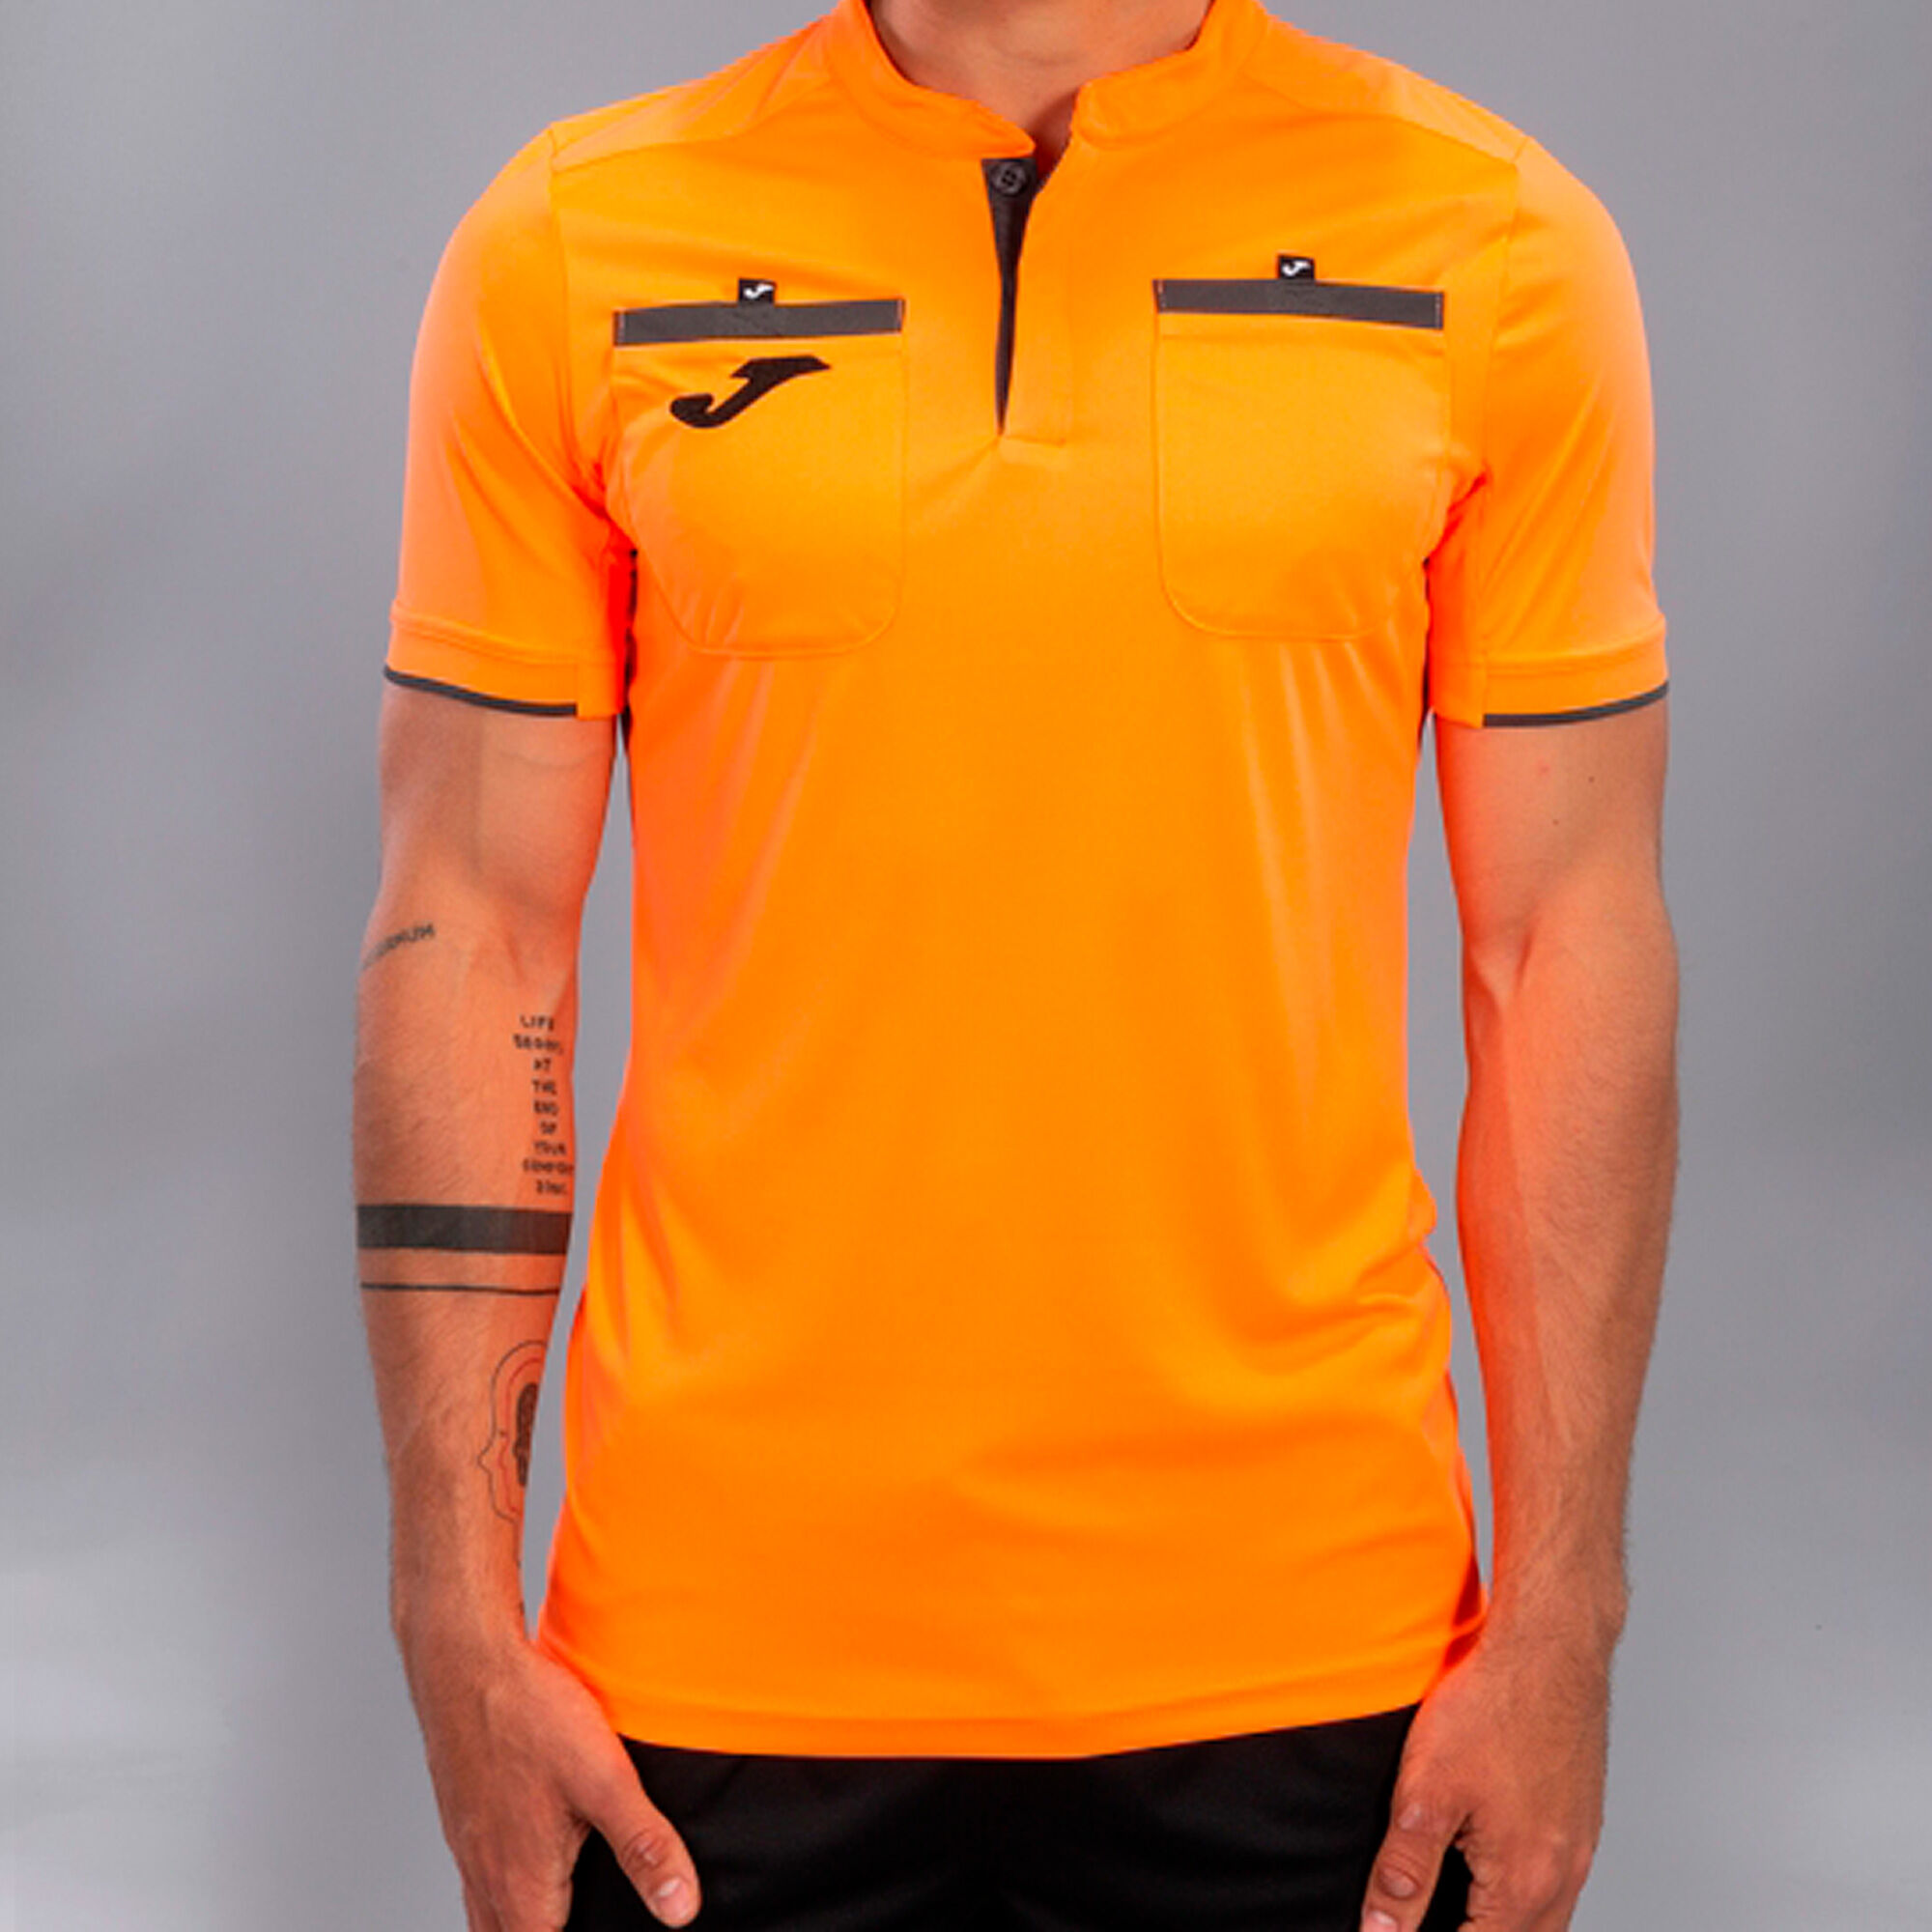 Camiseta manga corta hombre Referee naranja